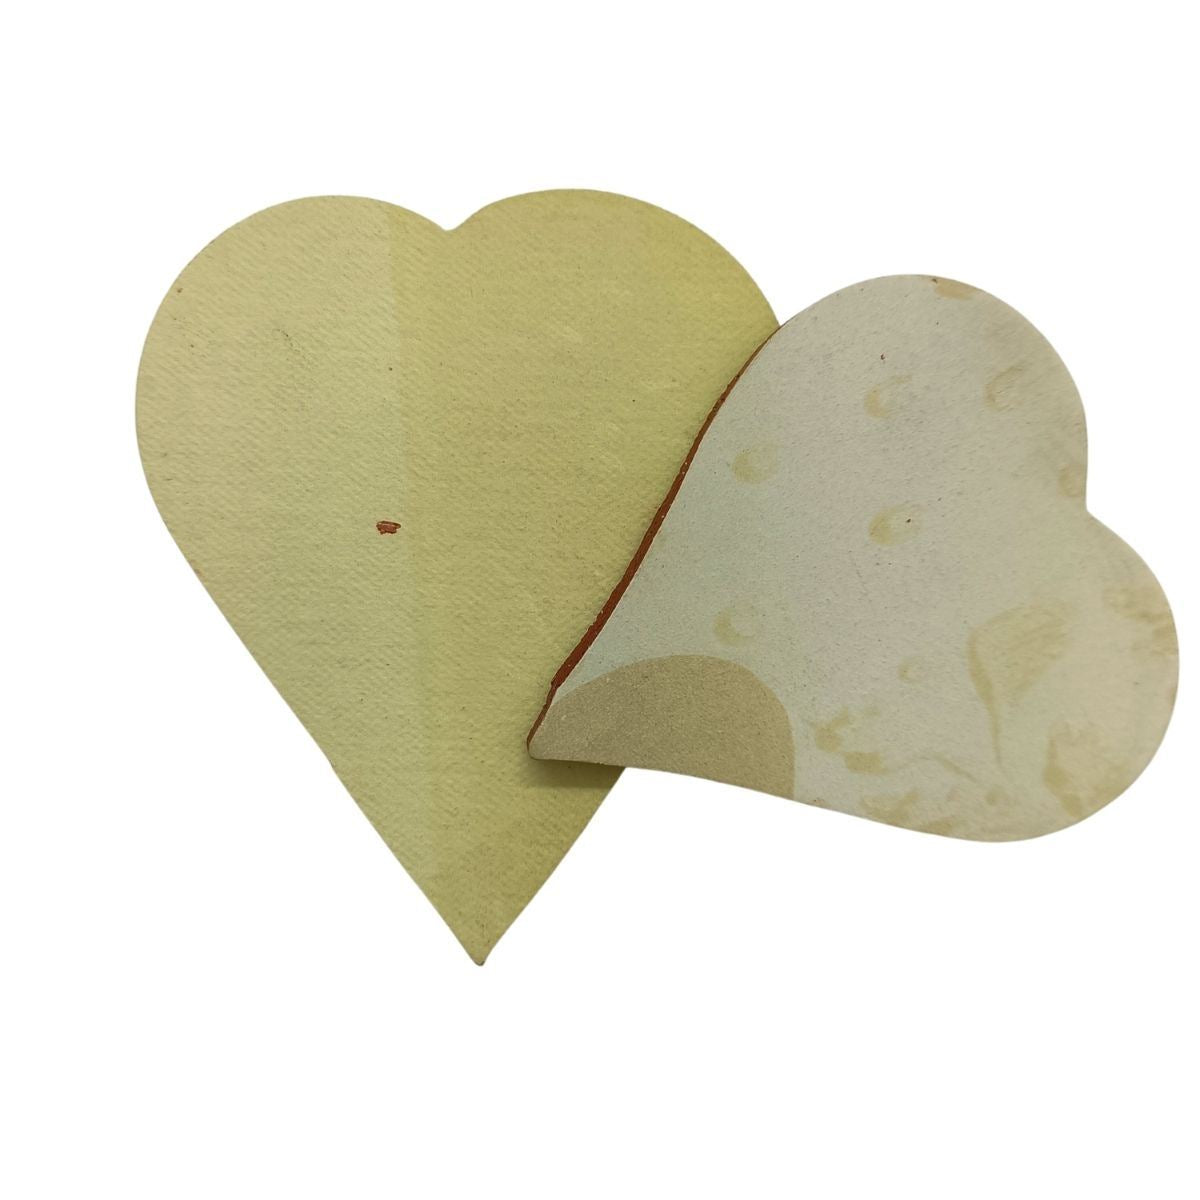 Handmade Shapes - Lemon/Lime unglazed Hearts: Pack of 2